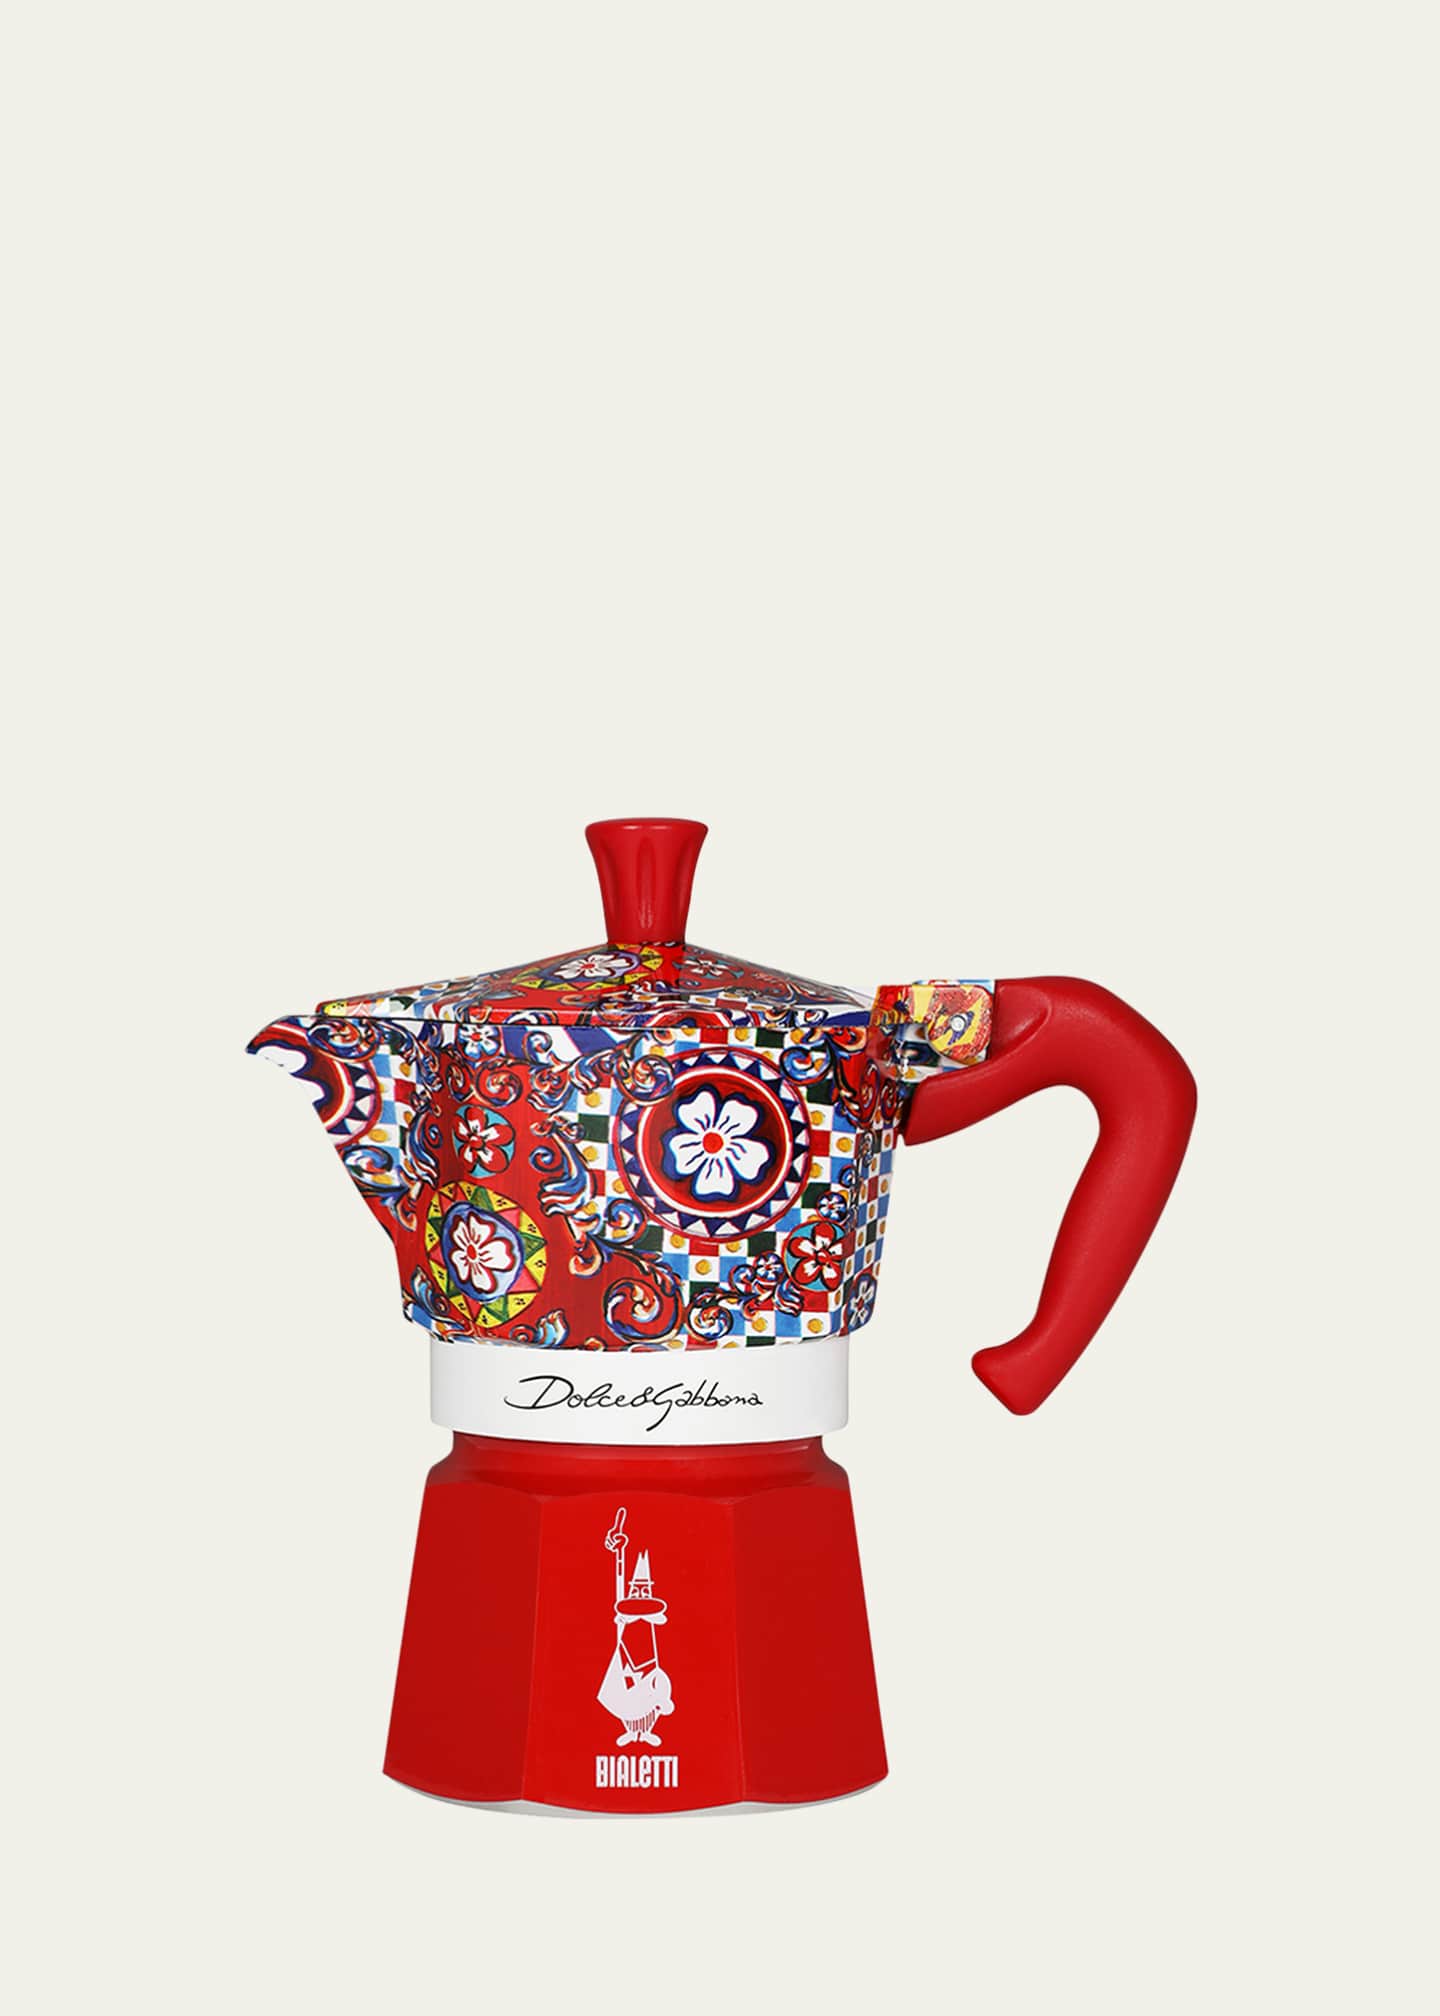 Bialetti x Dolce&Gabbana x Bialetti Moka Express 3-Cup Stovetop Coffee Pot